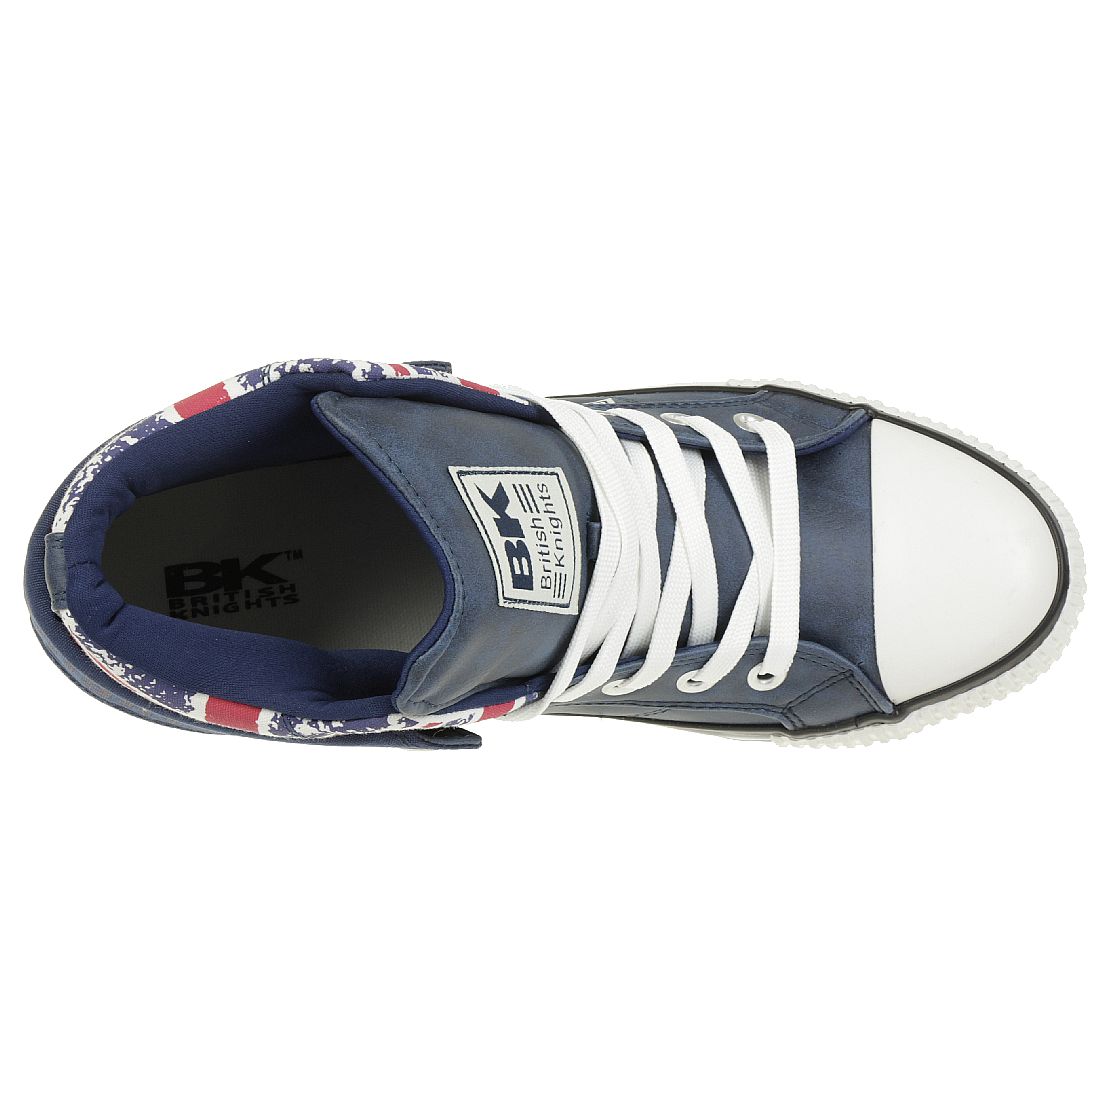 British Knights ROCO BK Sneaker B41-3709-15 England Flagge blau